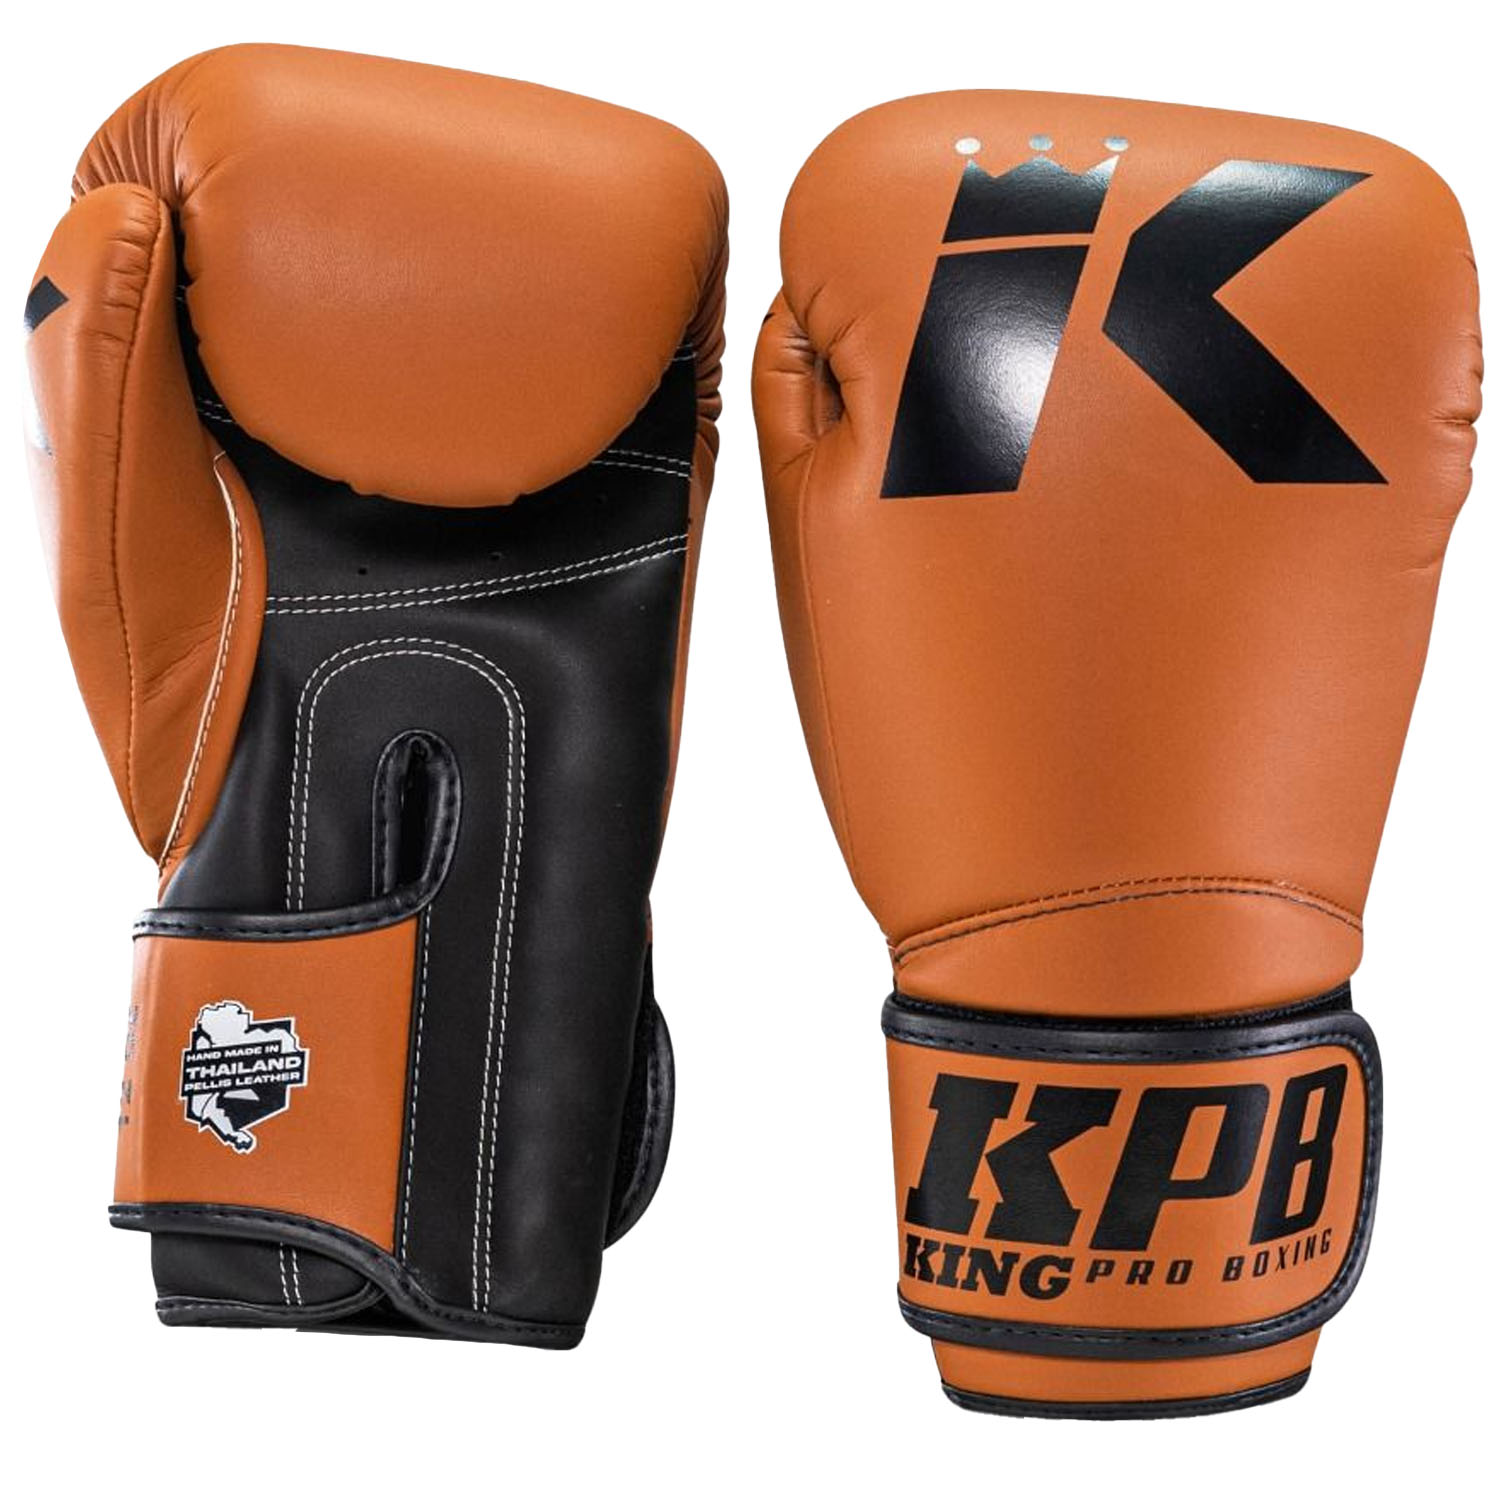 KING PRO BOXING Boxing Gloves, BGK 3, orange, 16 Oz